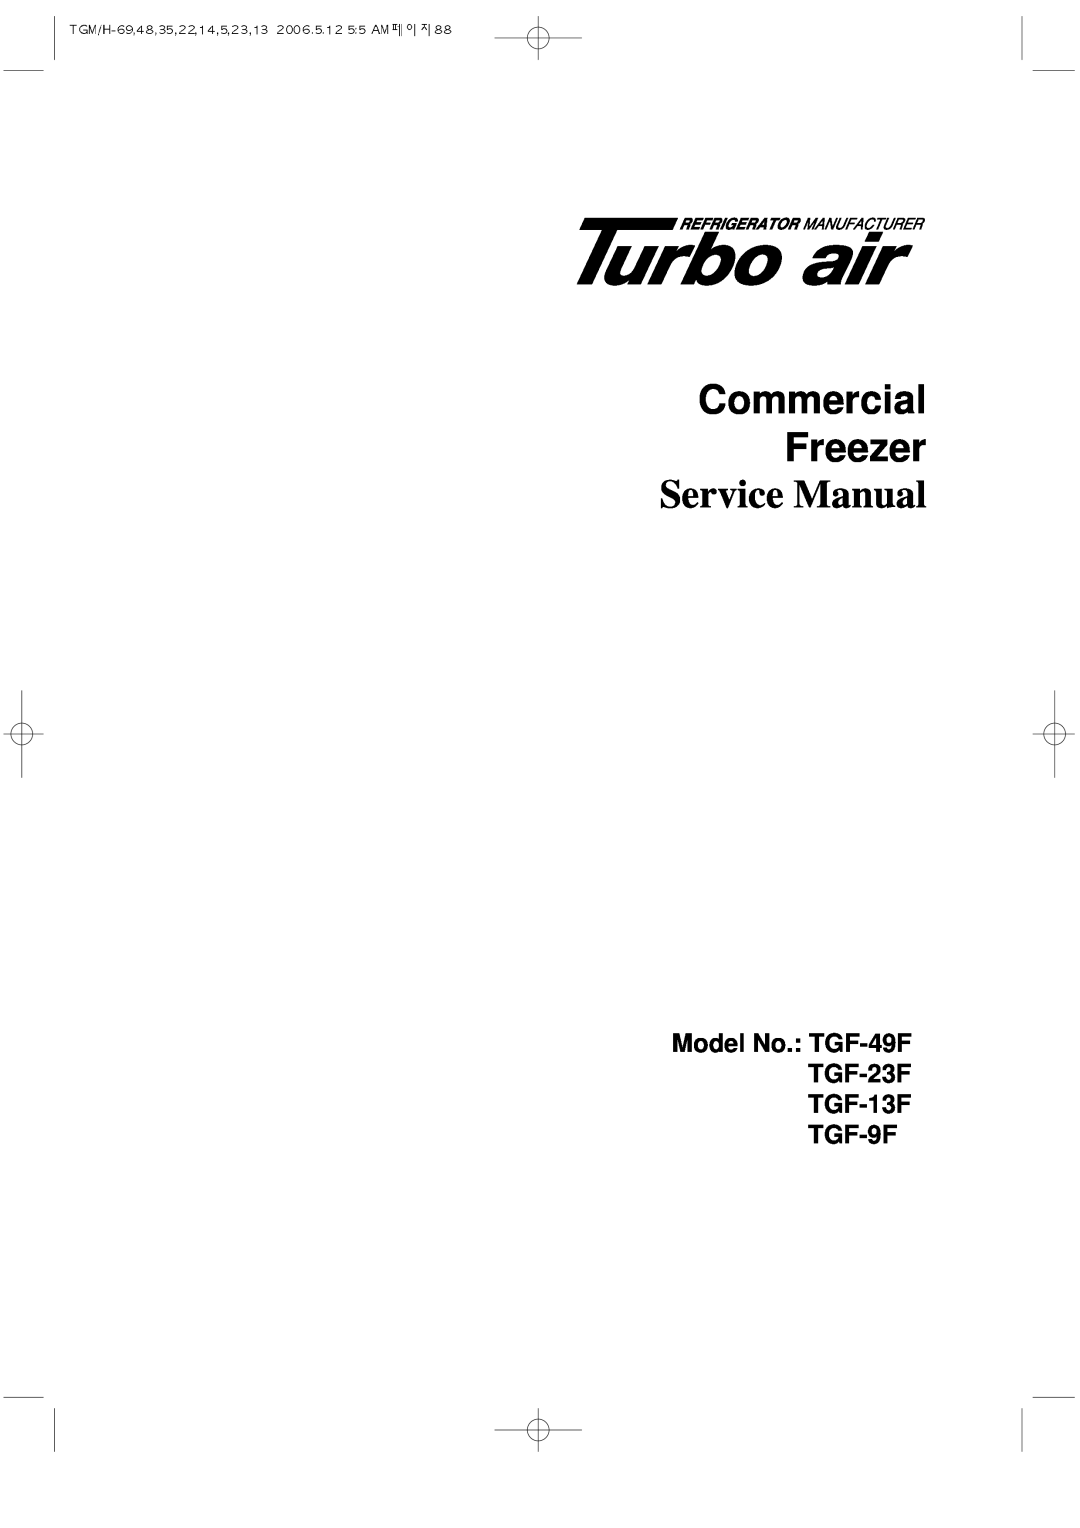 Turbo Air TGM-5R, TGM-11R, TGM-22R, TGM-48R Commercial Freezer, Service Manual, Model No. TGF-49F TGF-23F TGF-13F TGF-9F 